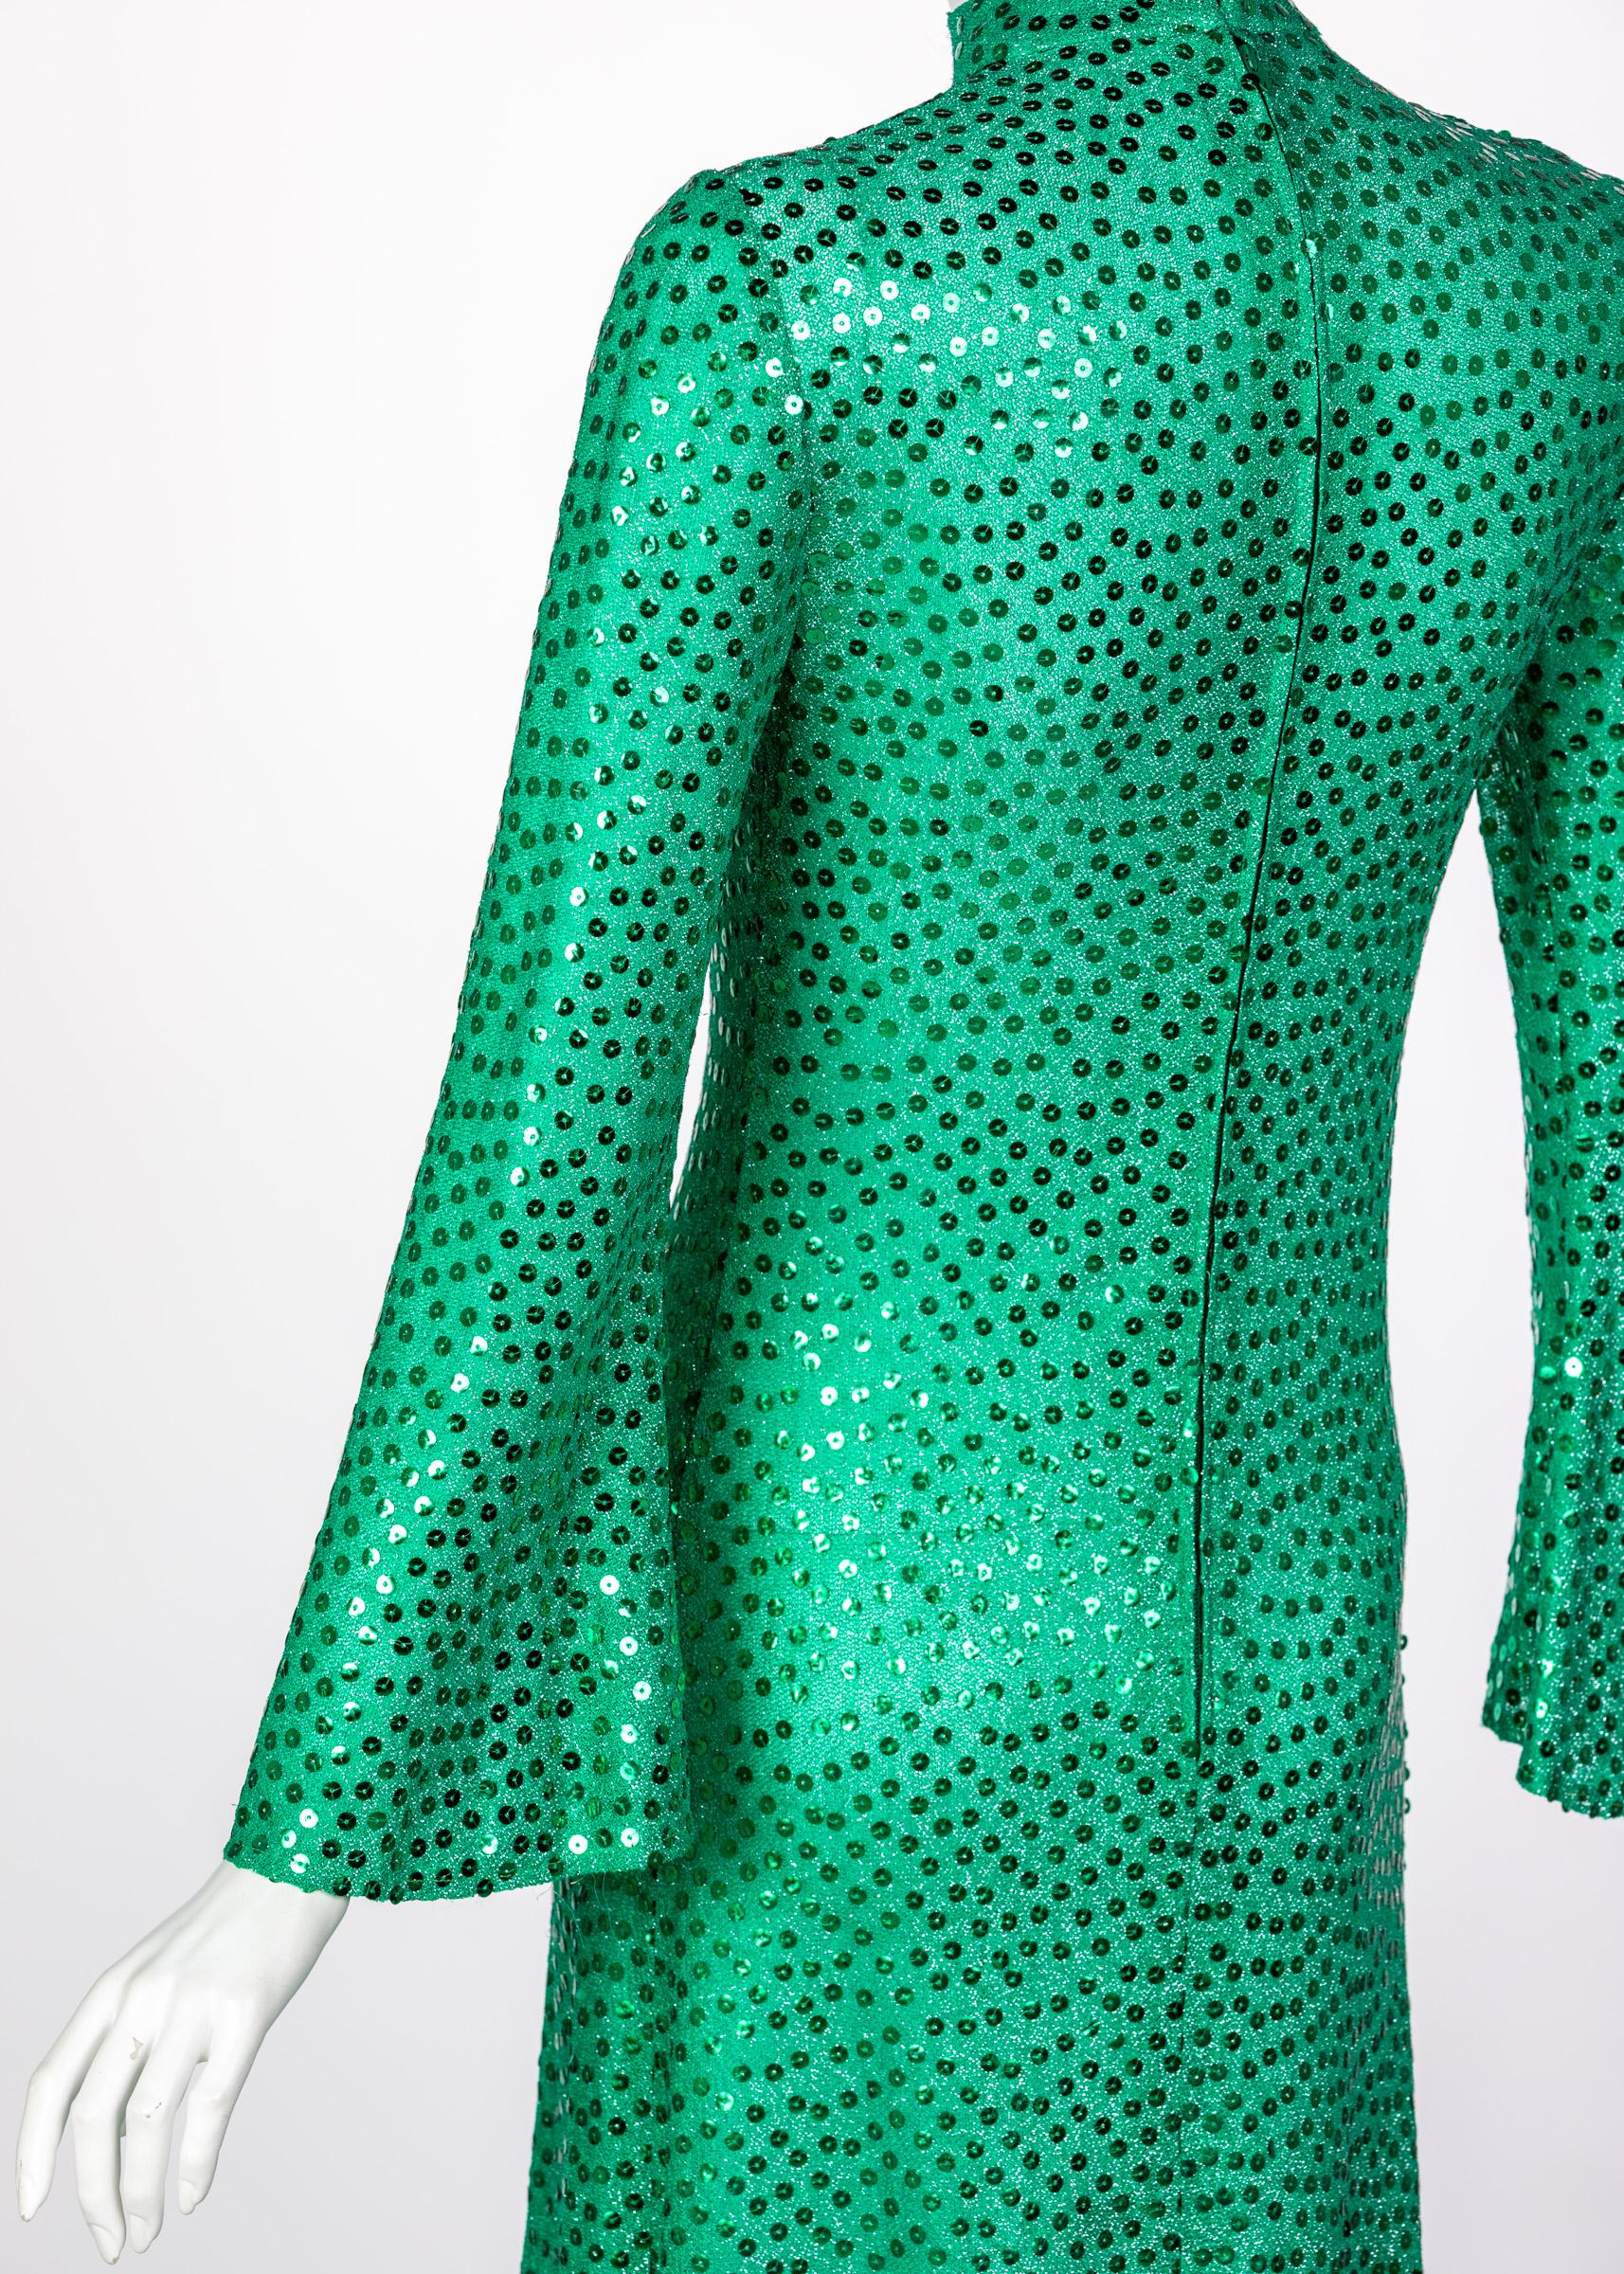 Women's Mollie Parnis Emerald Green Mock Neck Sequin Dress, 1960s For Sale